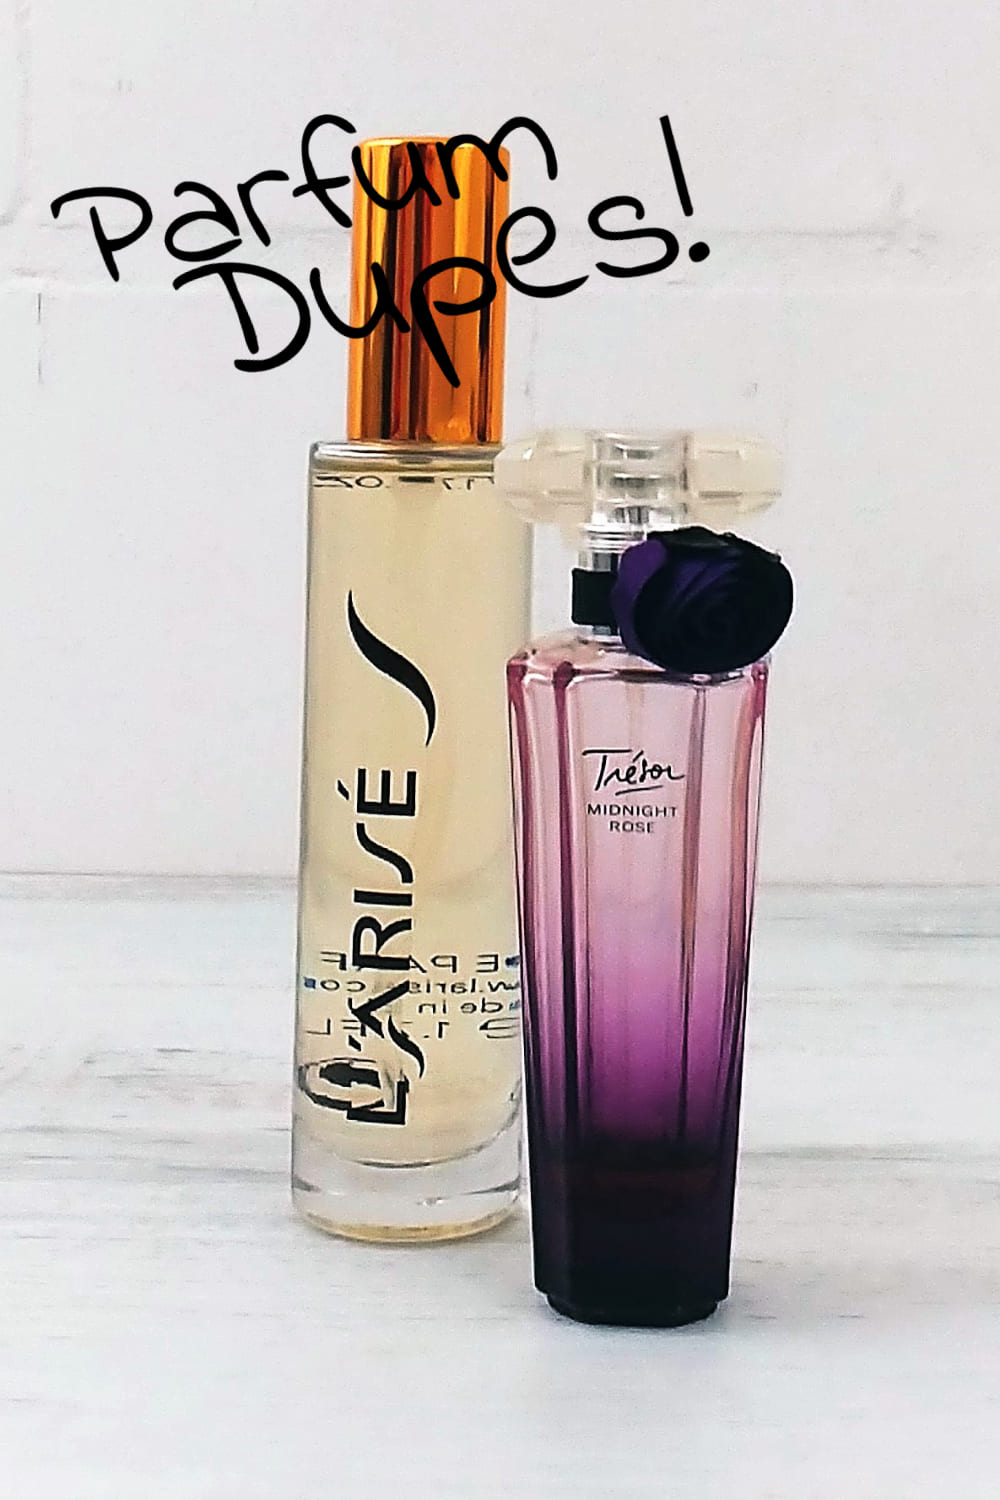 Parfum Dupes - Zwillingsduft und original Duft